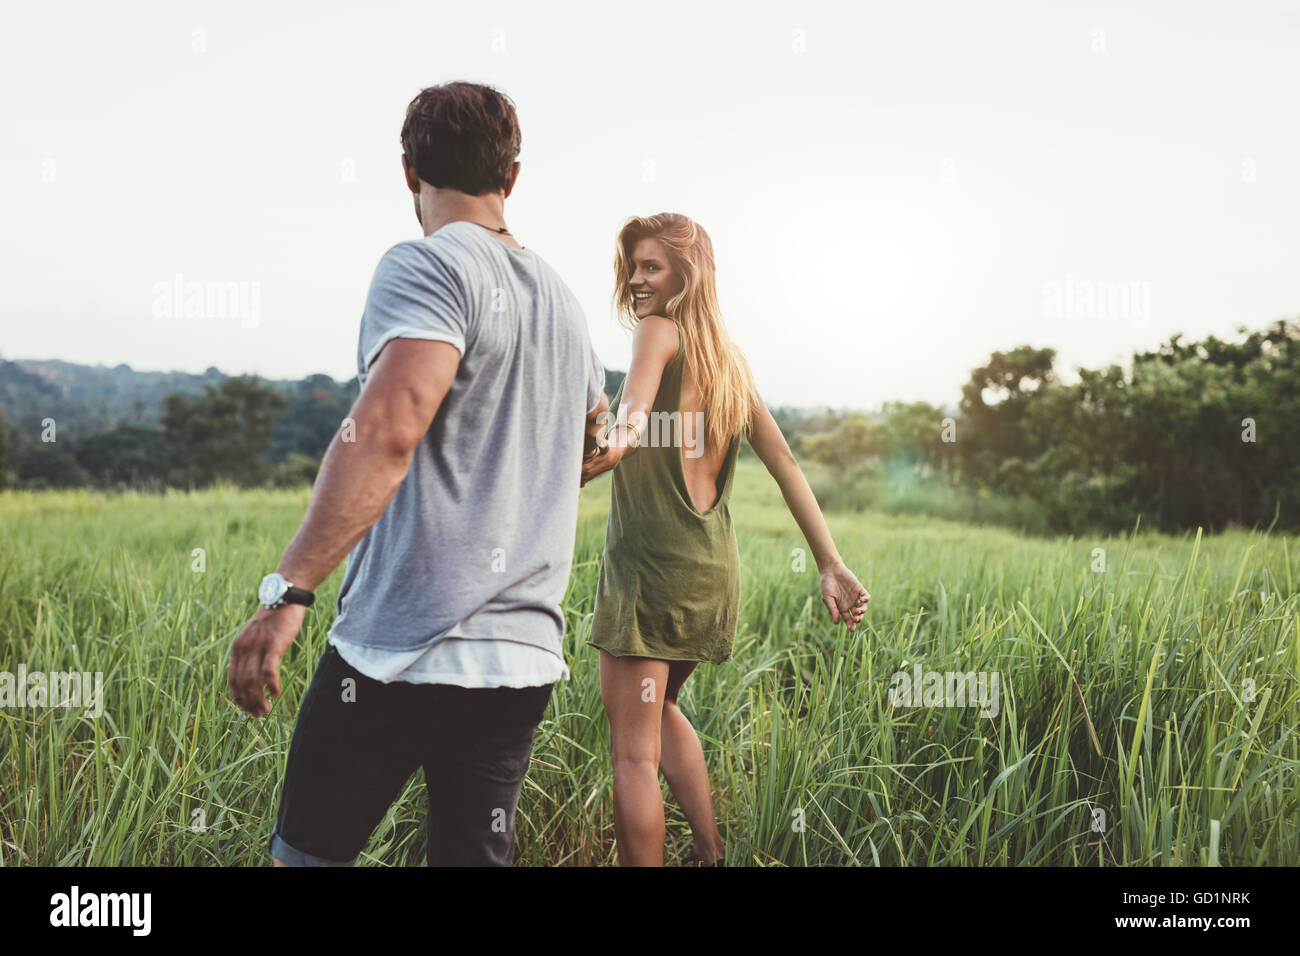 Rear view shot of young woman walking with her boyfriend on grass field. Couple enjoying a walk through grass land. Stock Photo